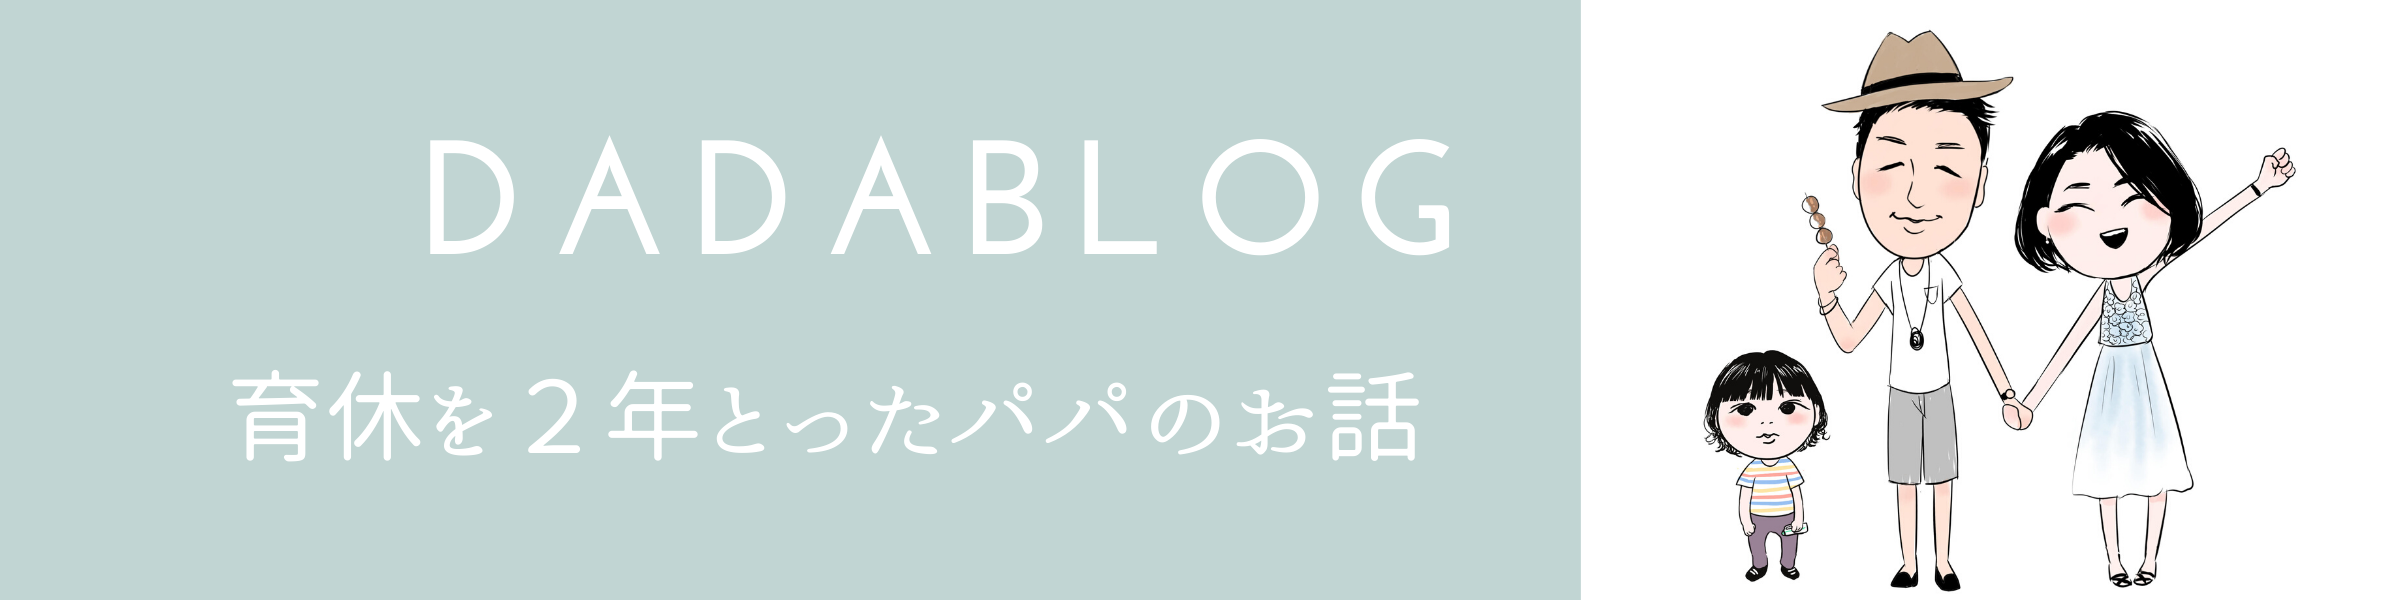 DADABlog